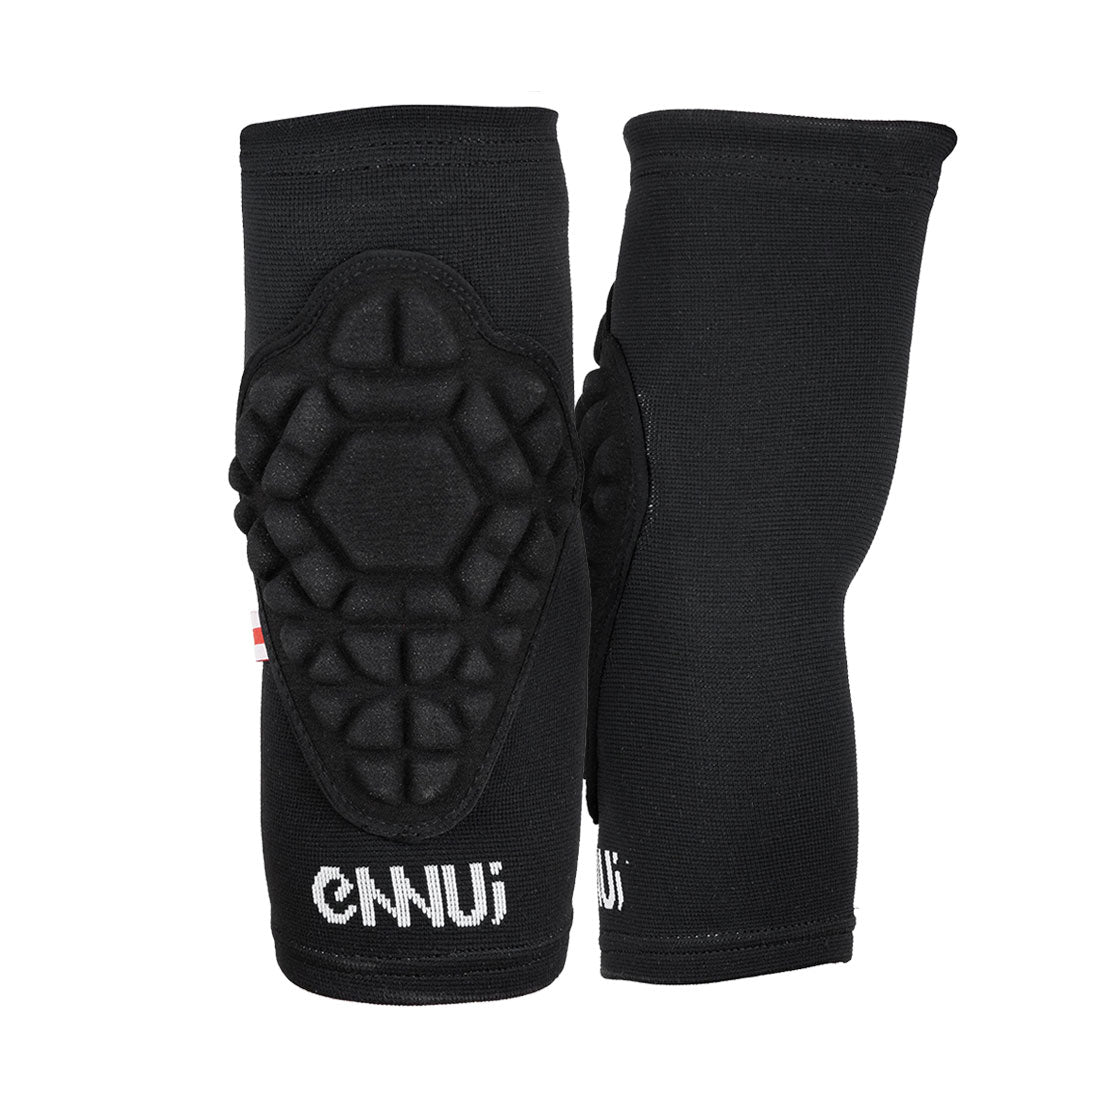 Ennui Shock Sleeve PRO Elbow Gasket Protective Gear